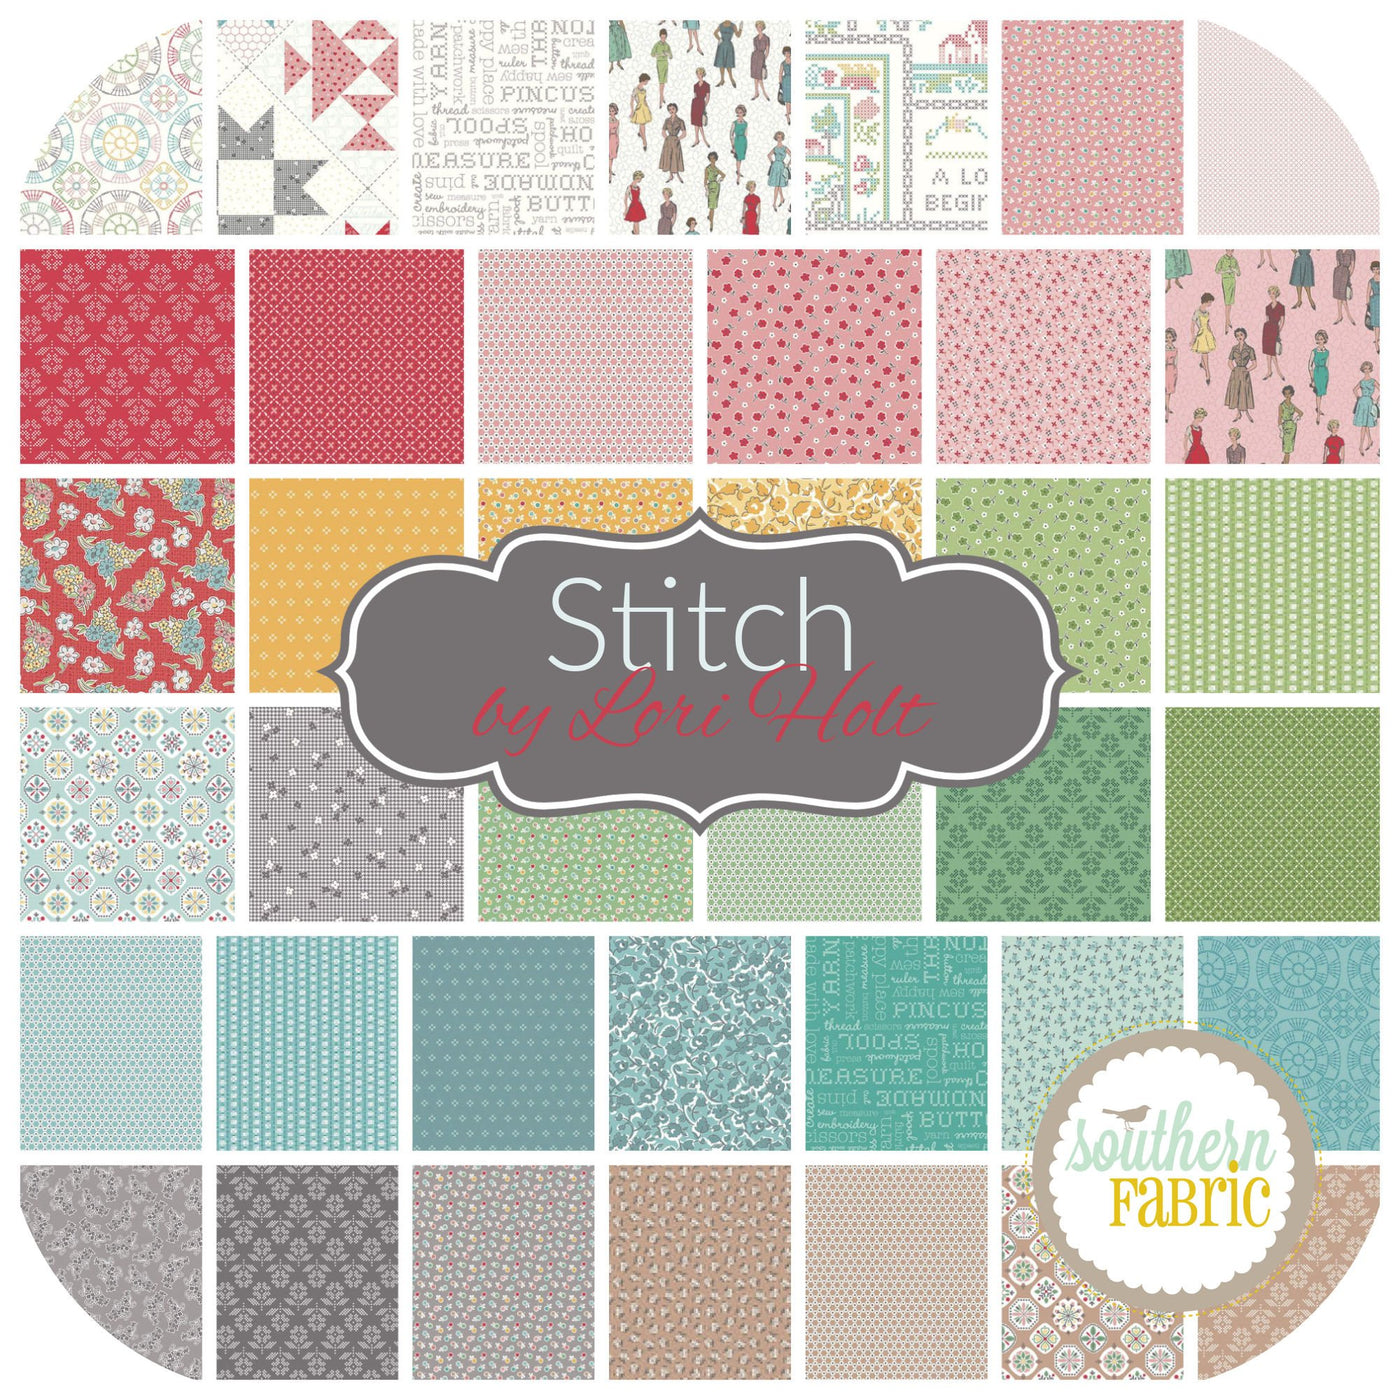 Stitch Fat Quarter Bundle (39 pcs) by Lori Holt for Riley Blake (LH.ST.FQ)